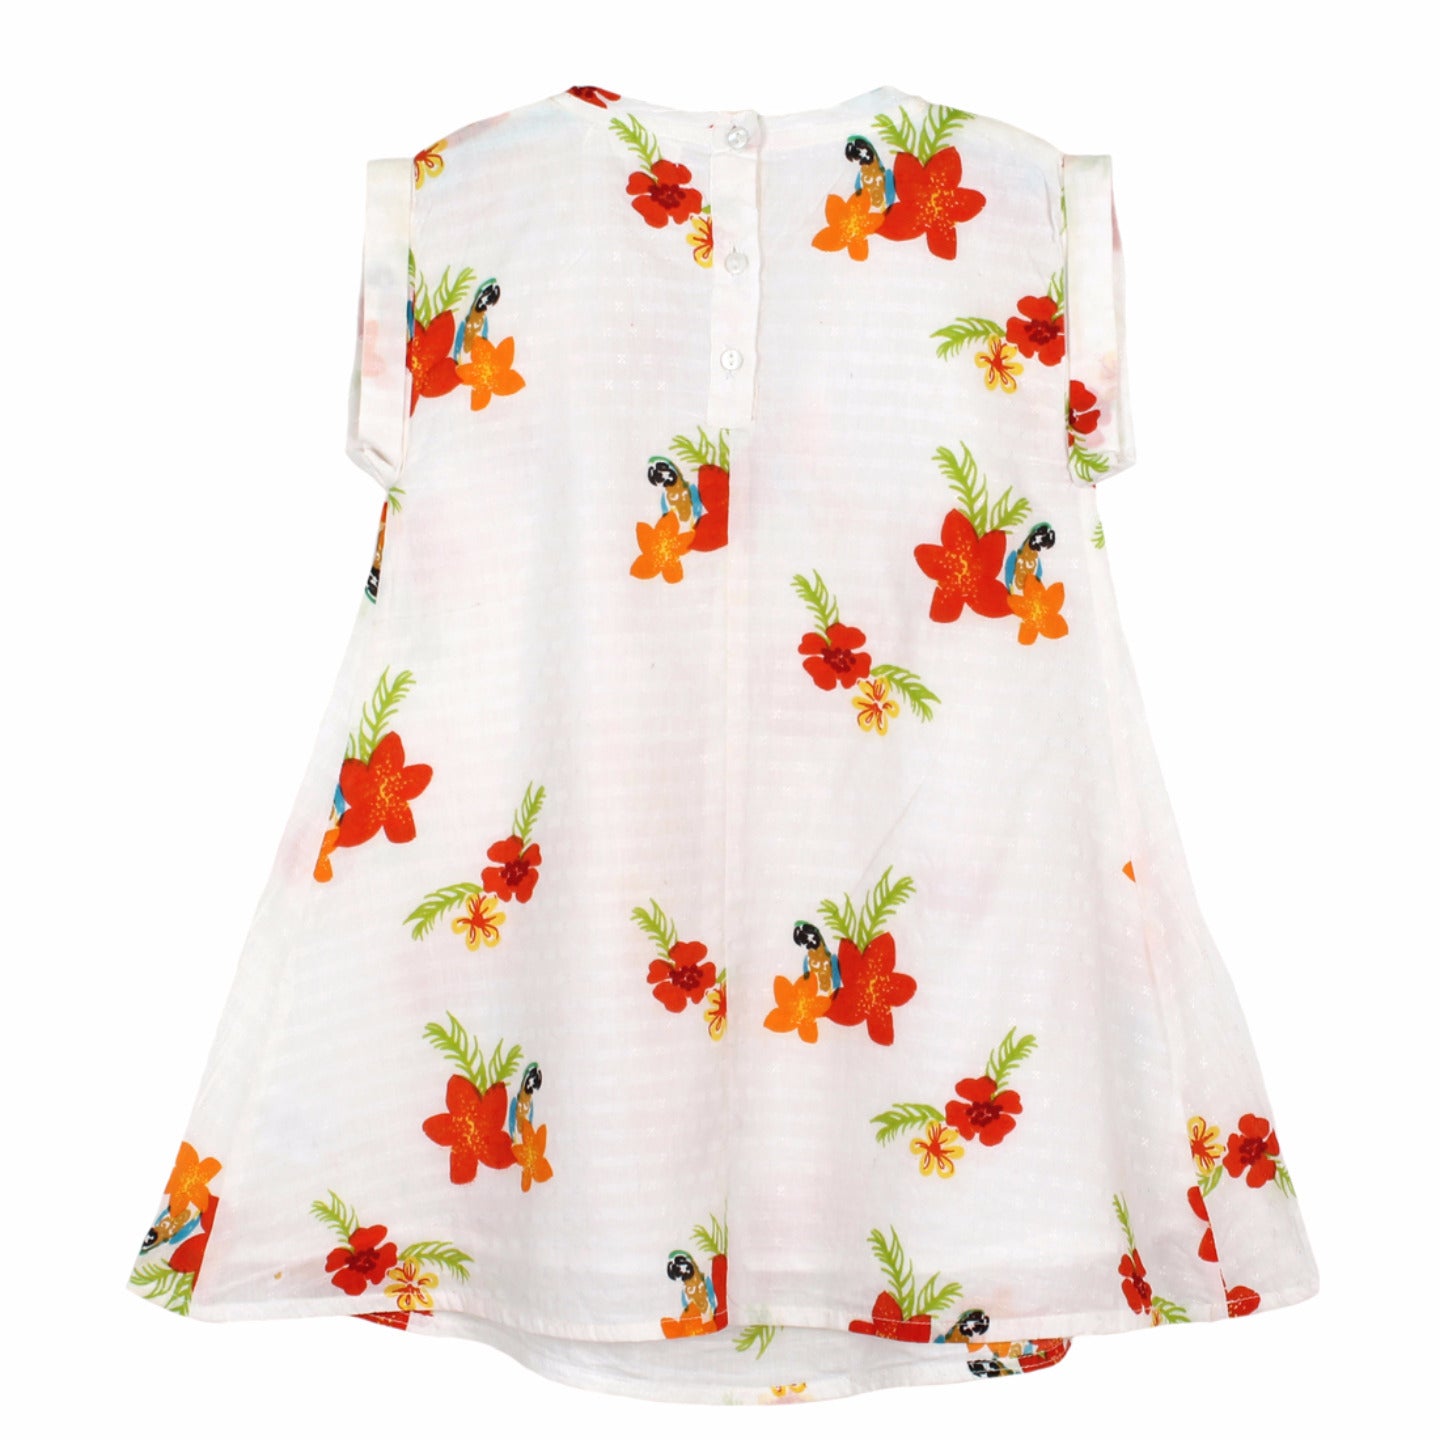 Tropical Print A-Line Dress